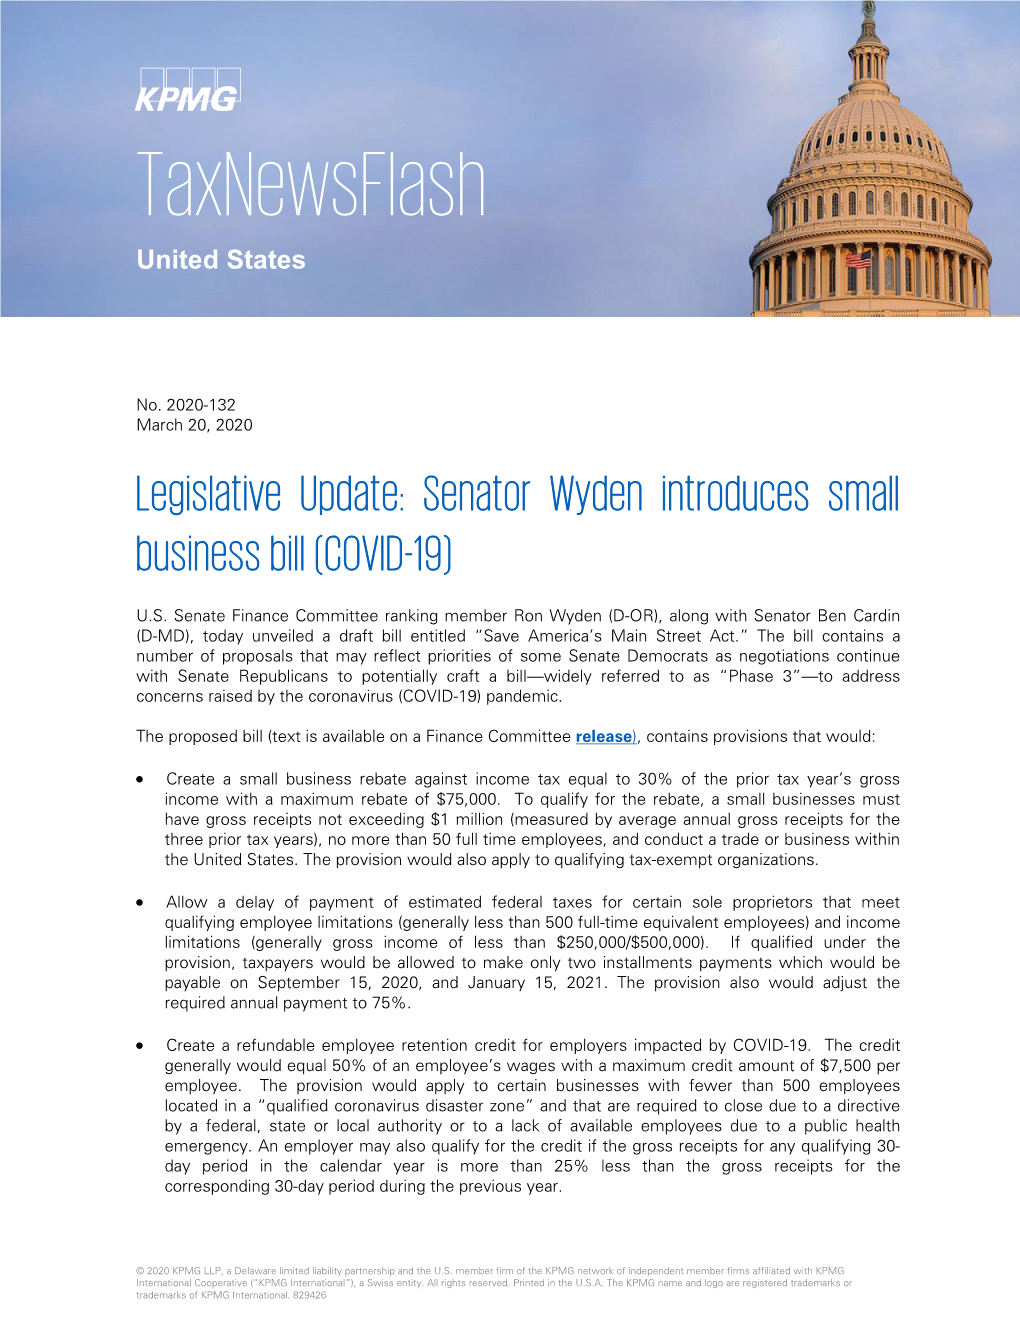 Legislative Update: Senator Wyden Introduces Small Business Bill (COVID-19)